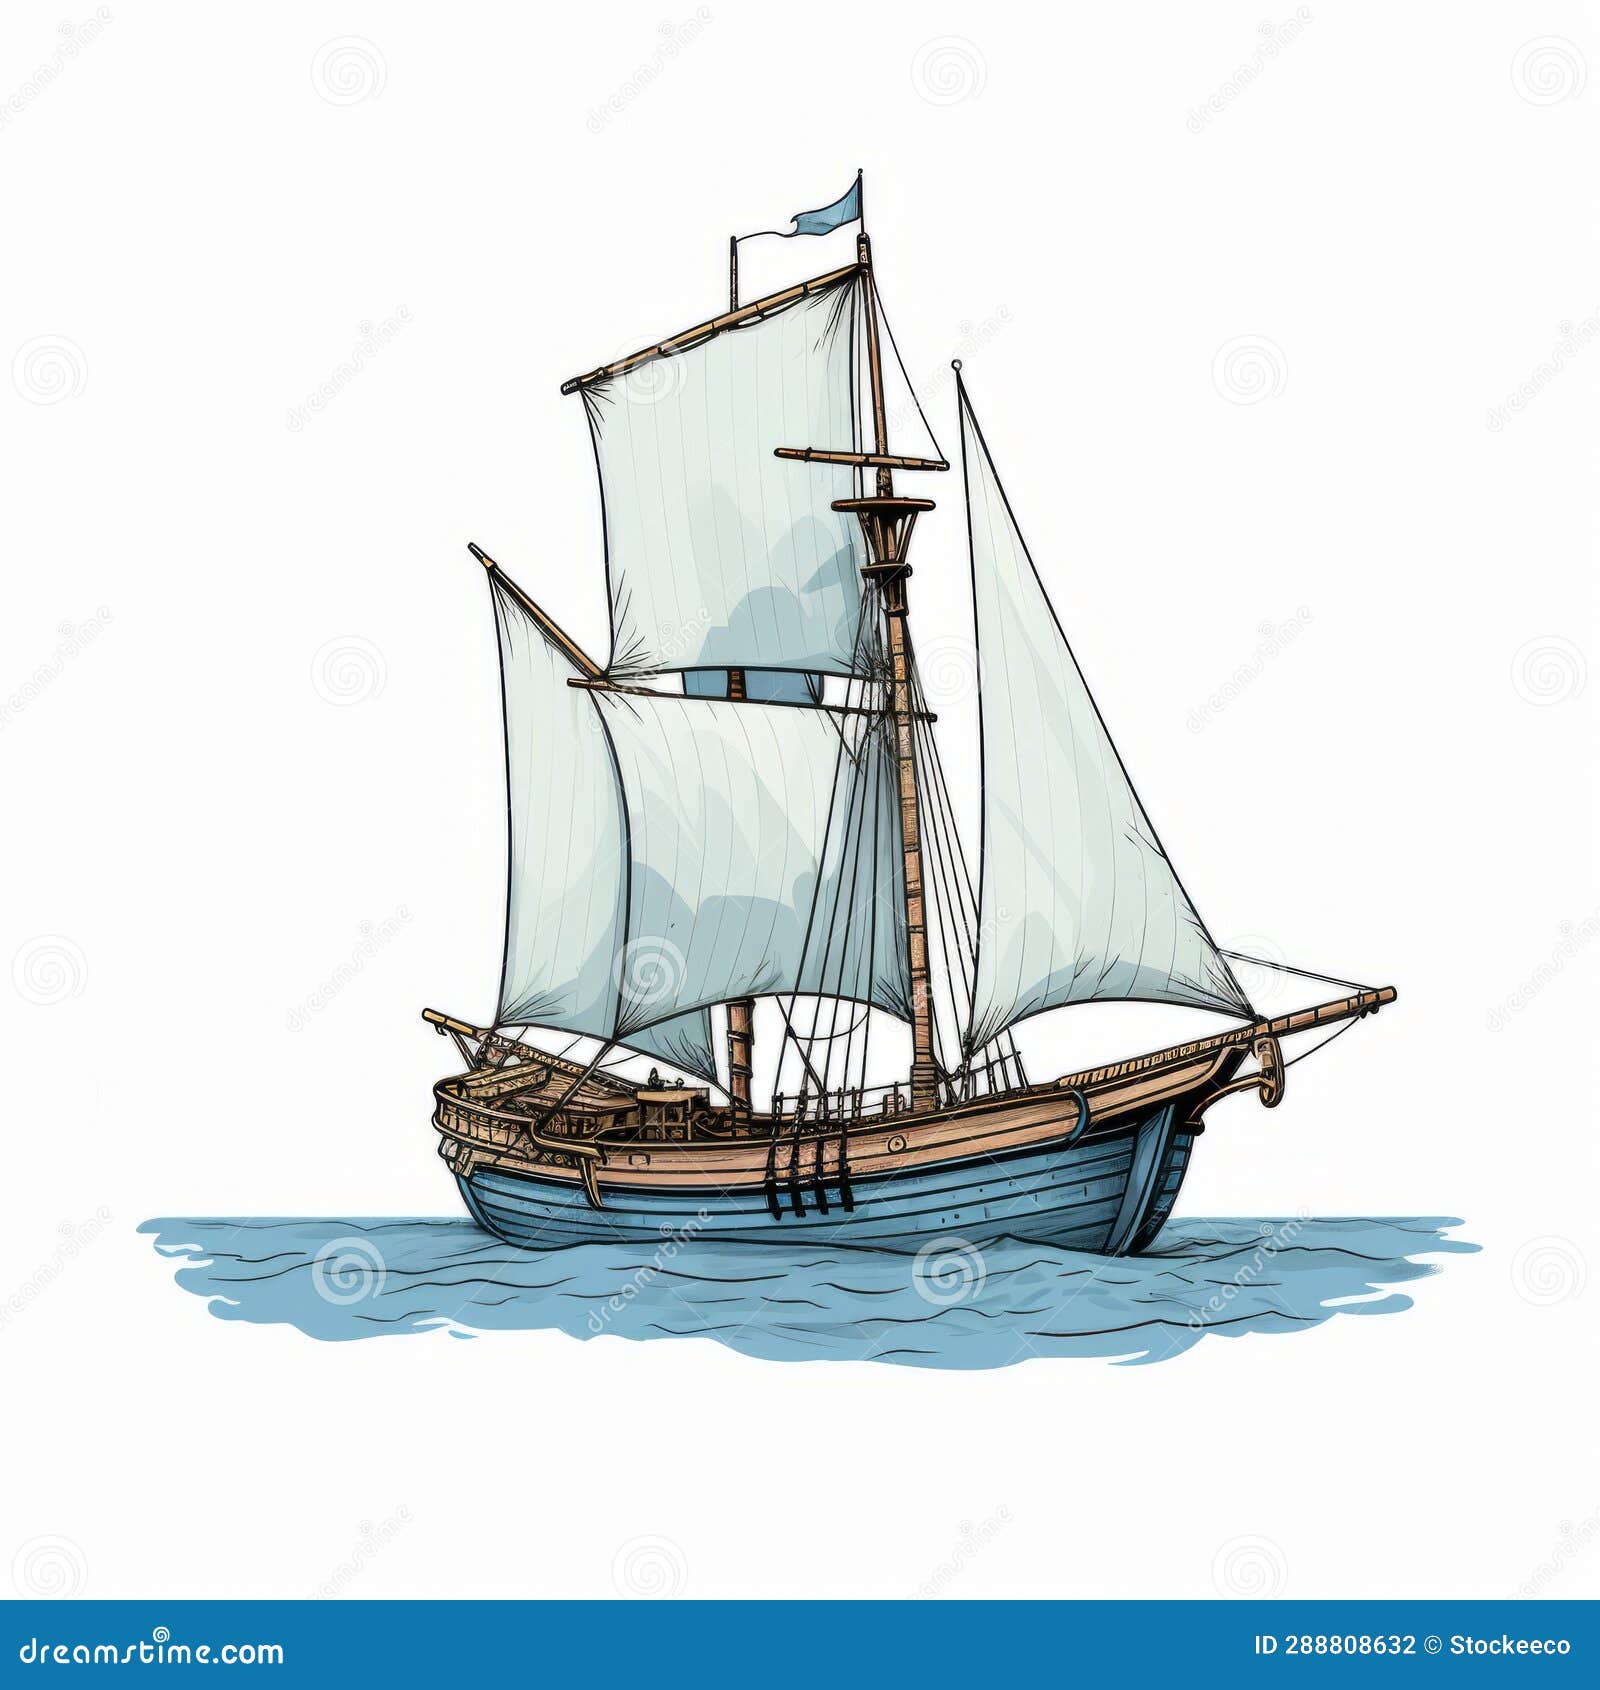 rustic renaissance sailing ship  in clip art style